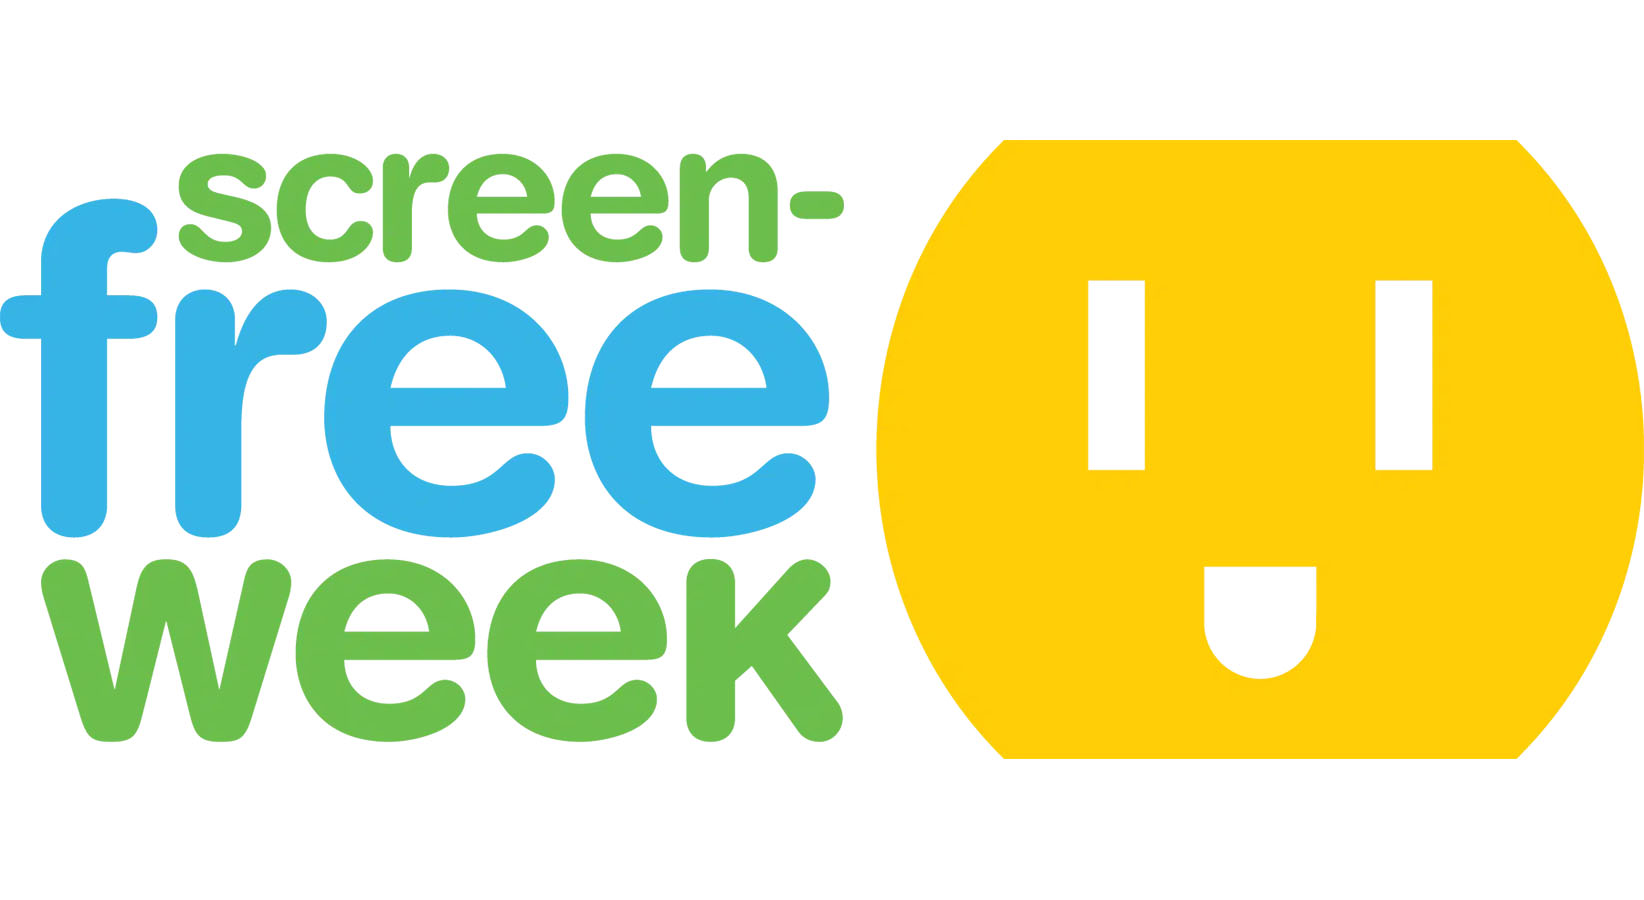 Screen-free week logo